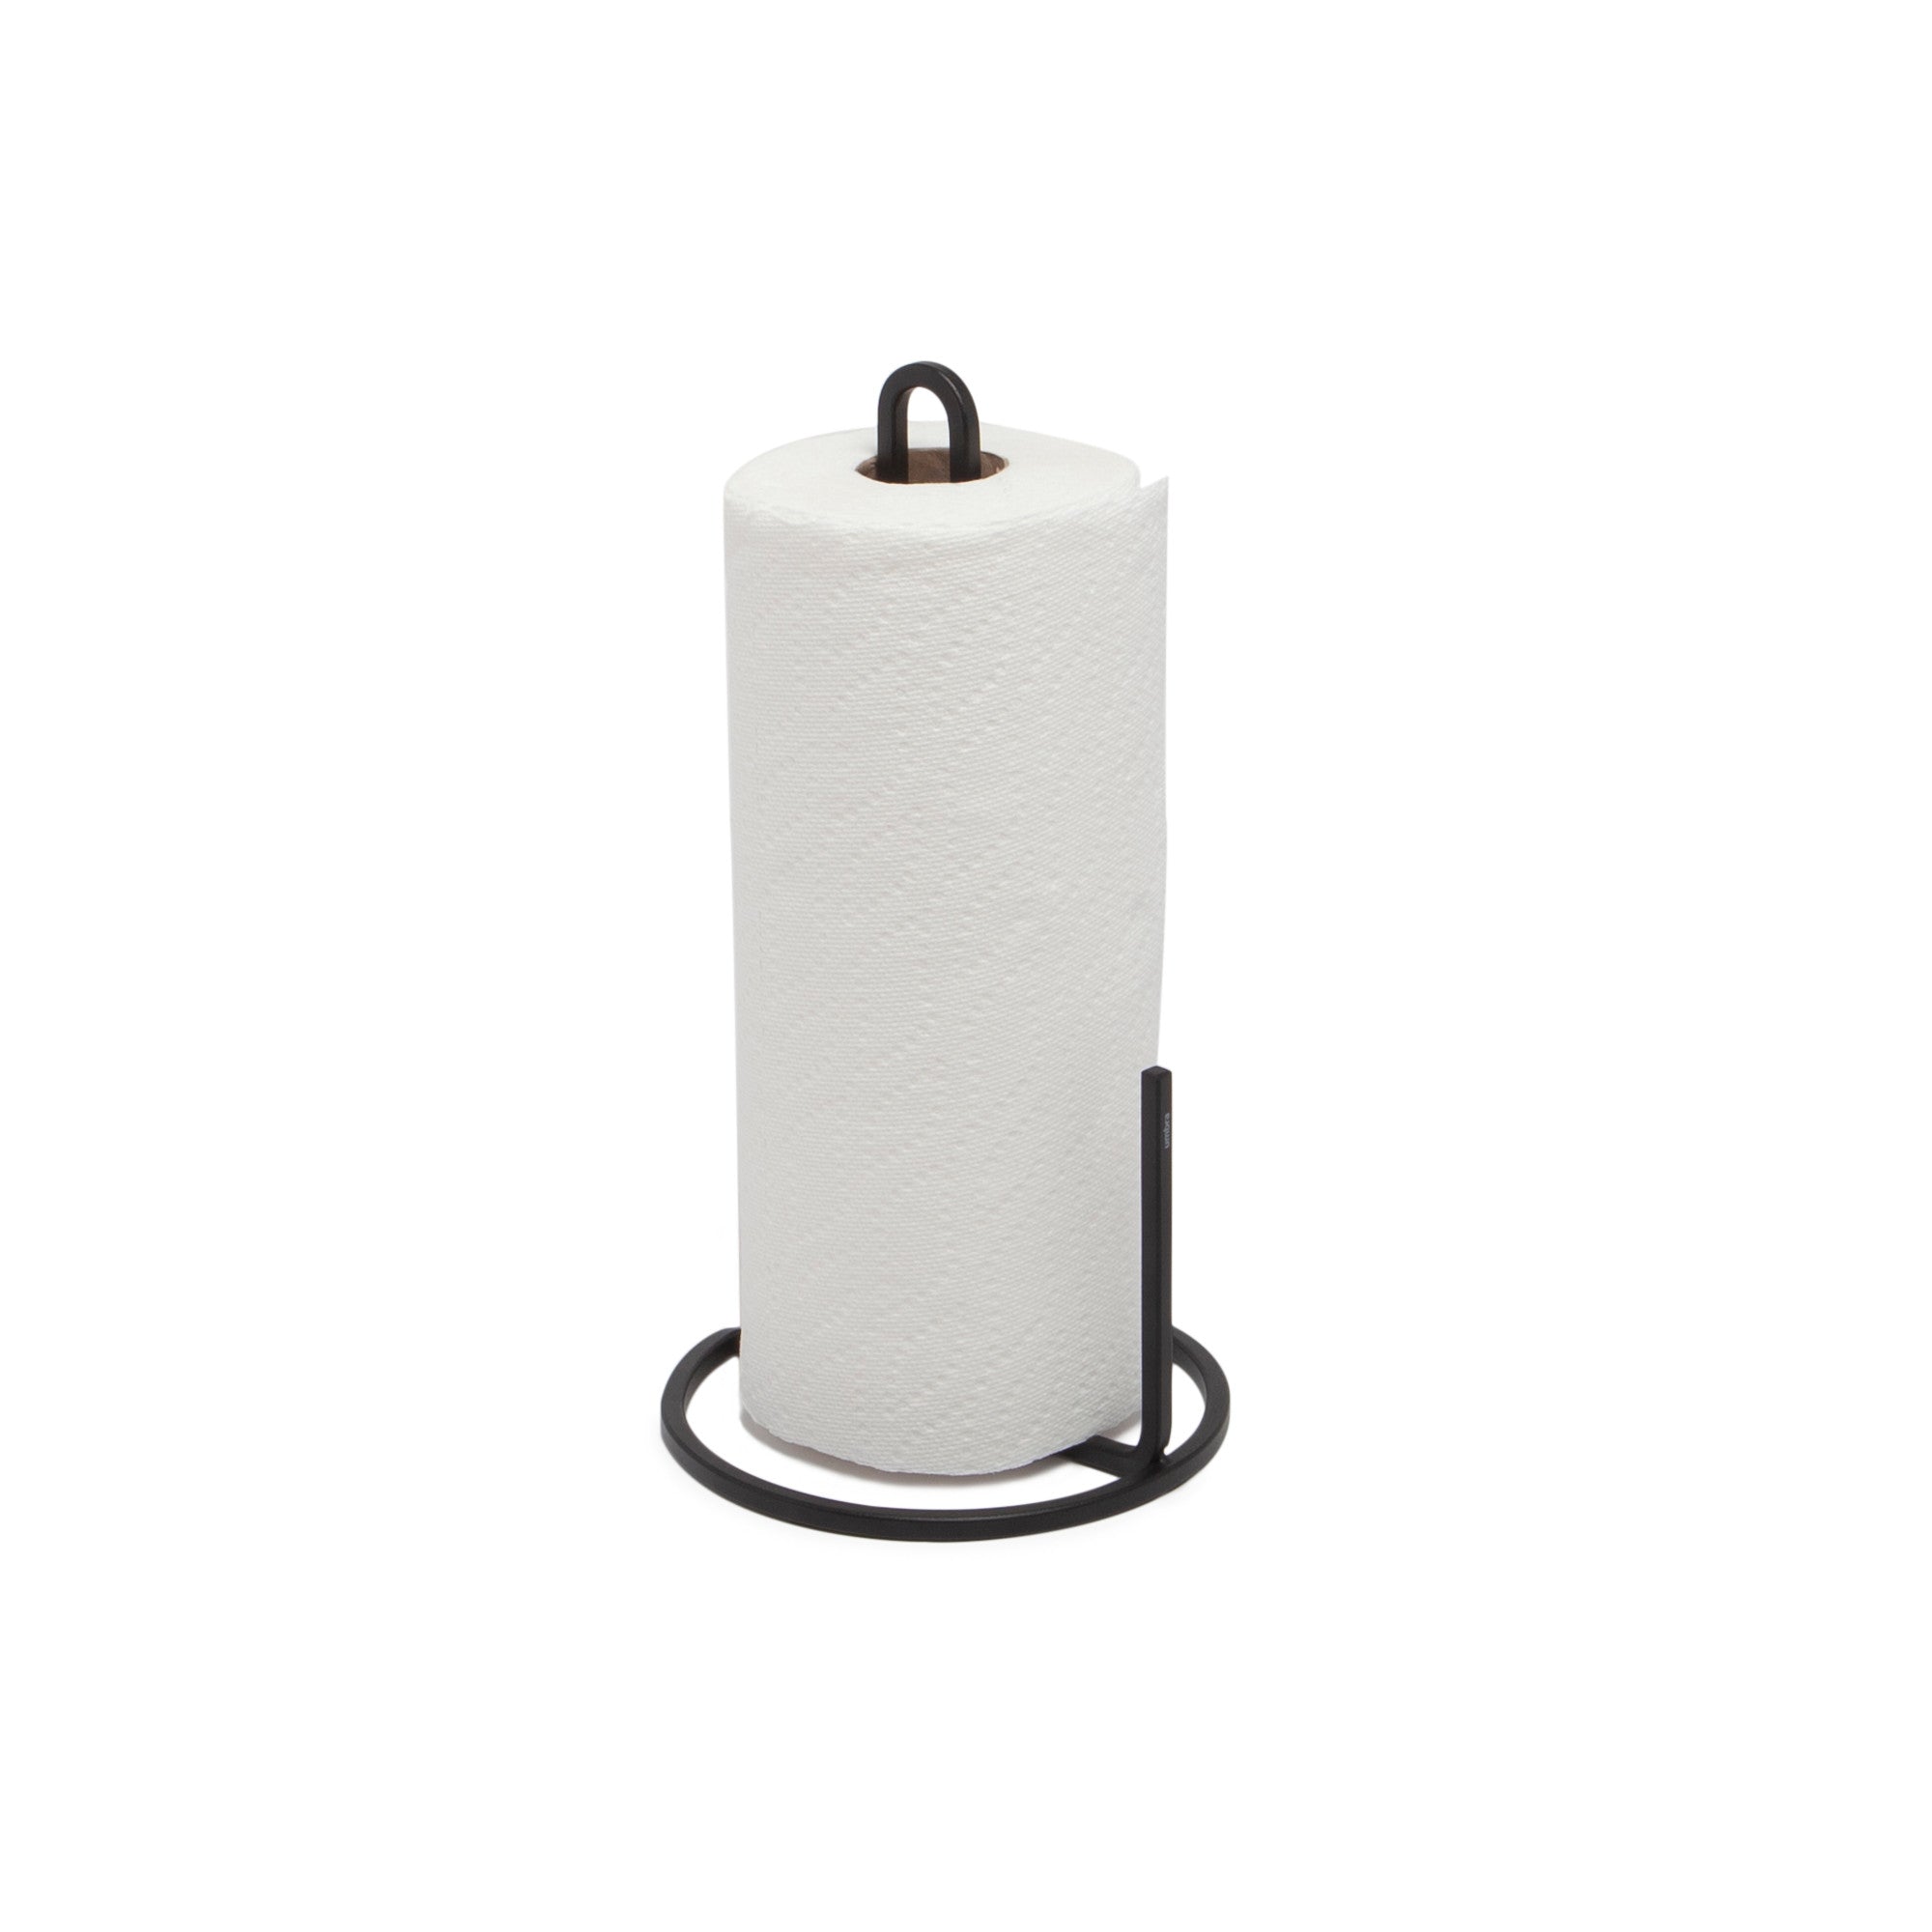 Umbra Squire Paper Towel Holder - White